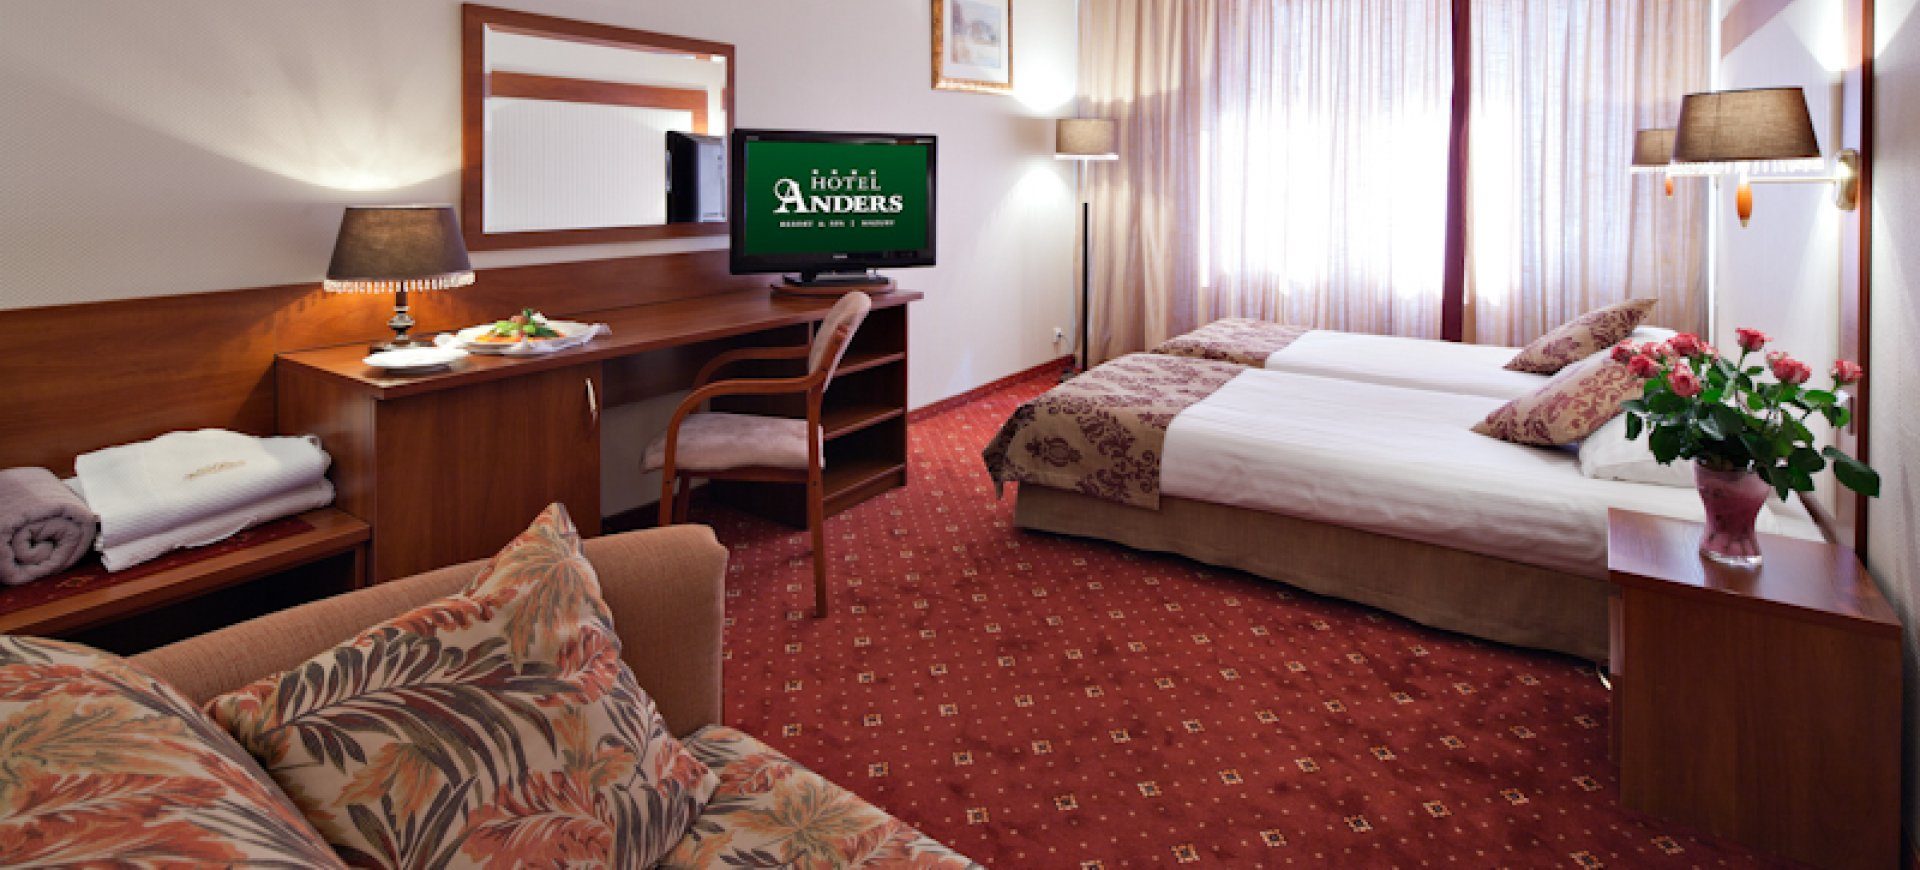 Rooms Hotel Anders